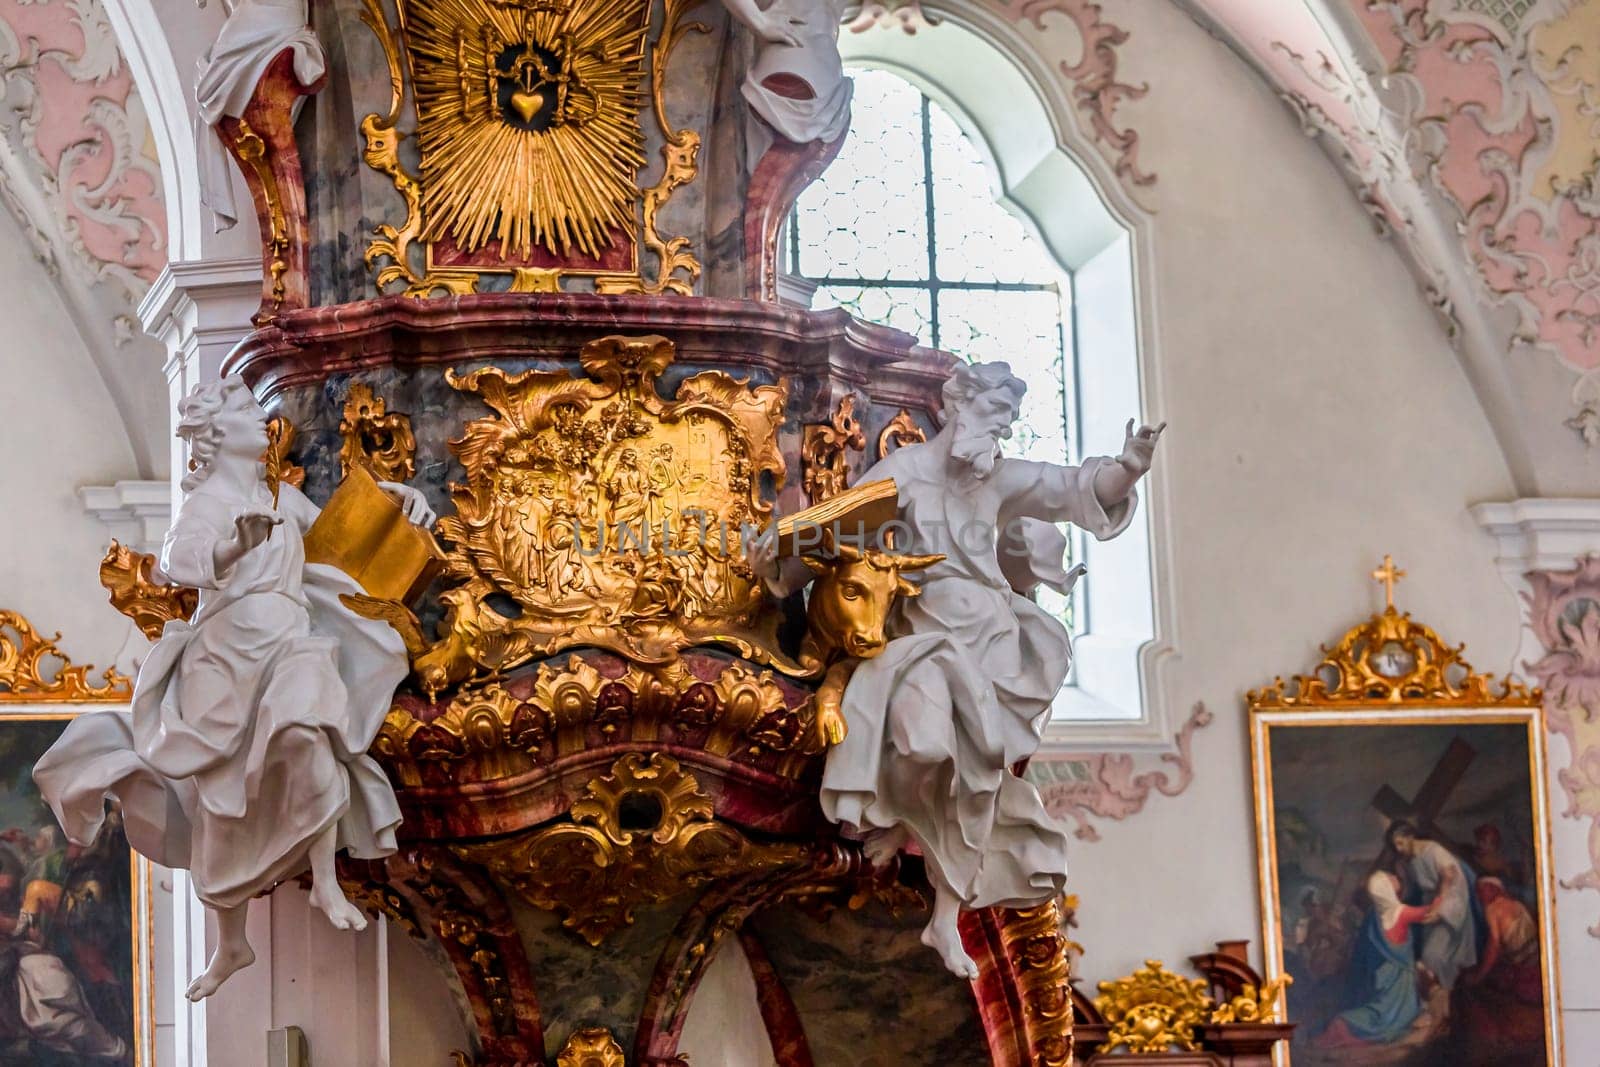 Rottenbuch abbey interiors, bavaria, germany by photogolfer